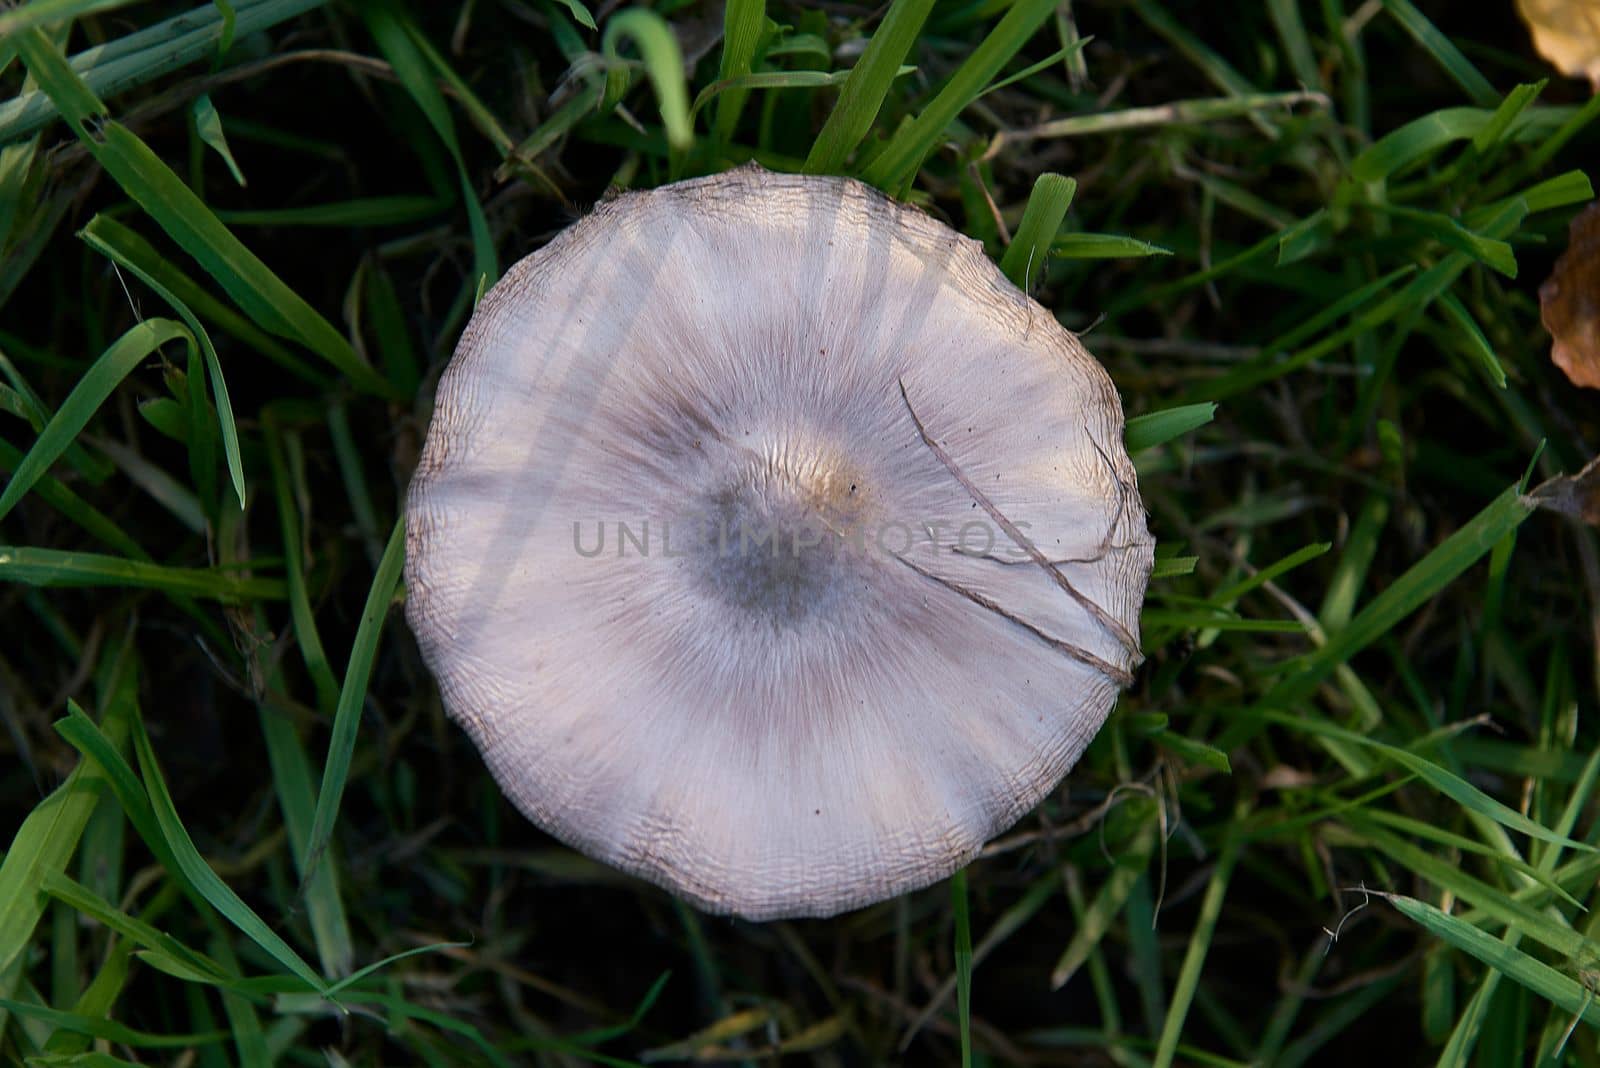 Unan Fungi mushroom on grass. Psilocybe cubensis.zenith view, white, textures, blurred background